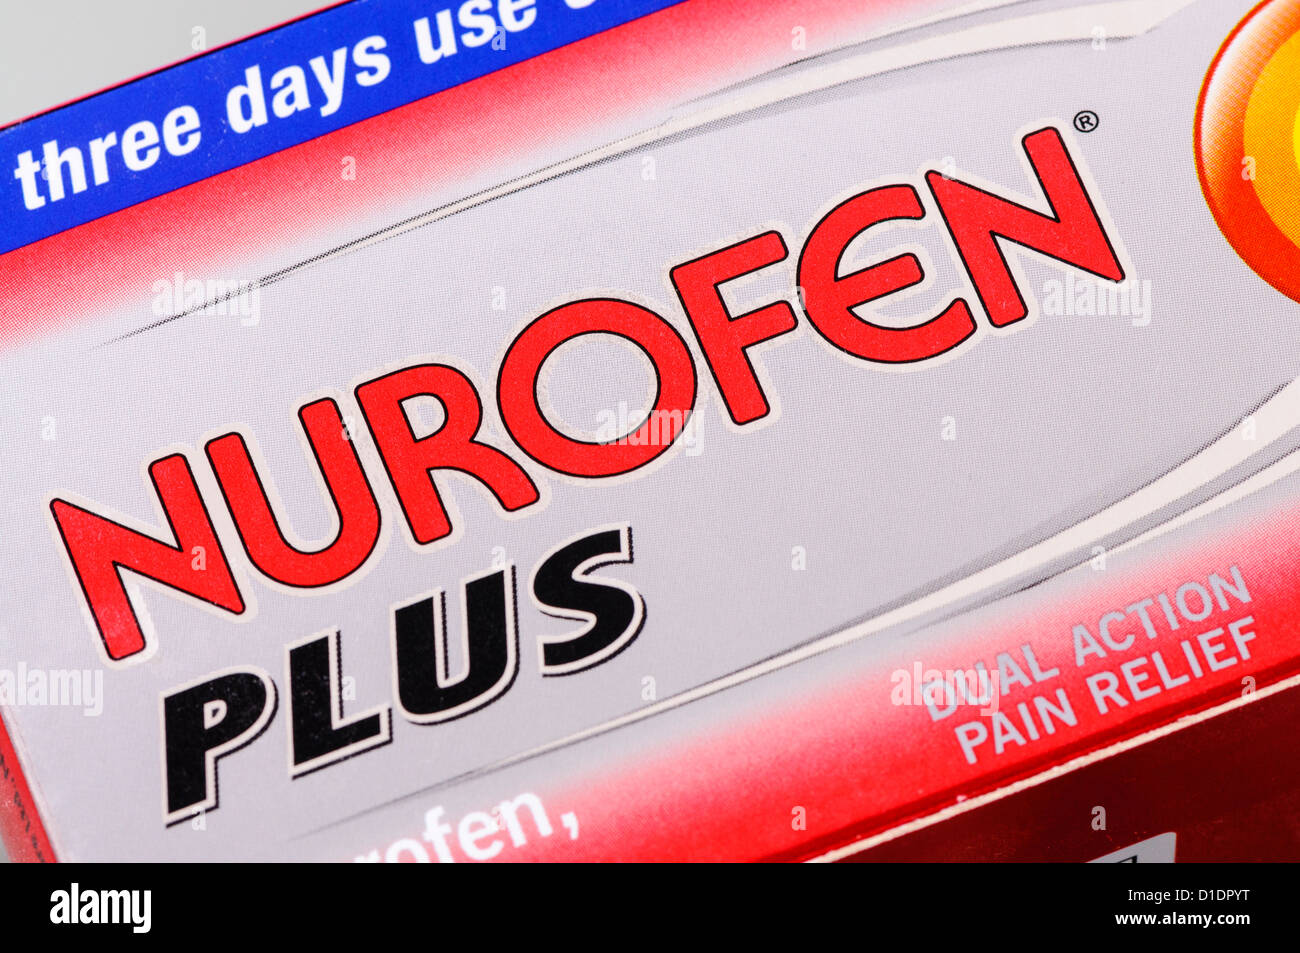 Box of Nurofen Plus painkiller tablets containing ibuprofen and codeine Stock Photo